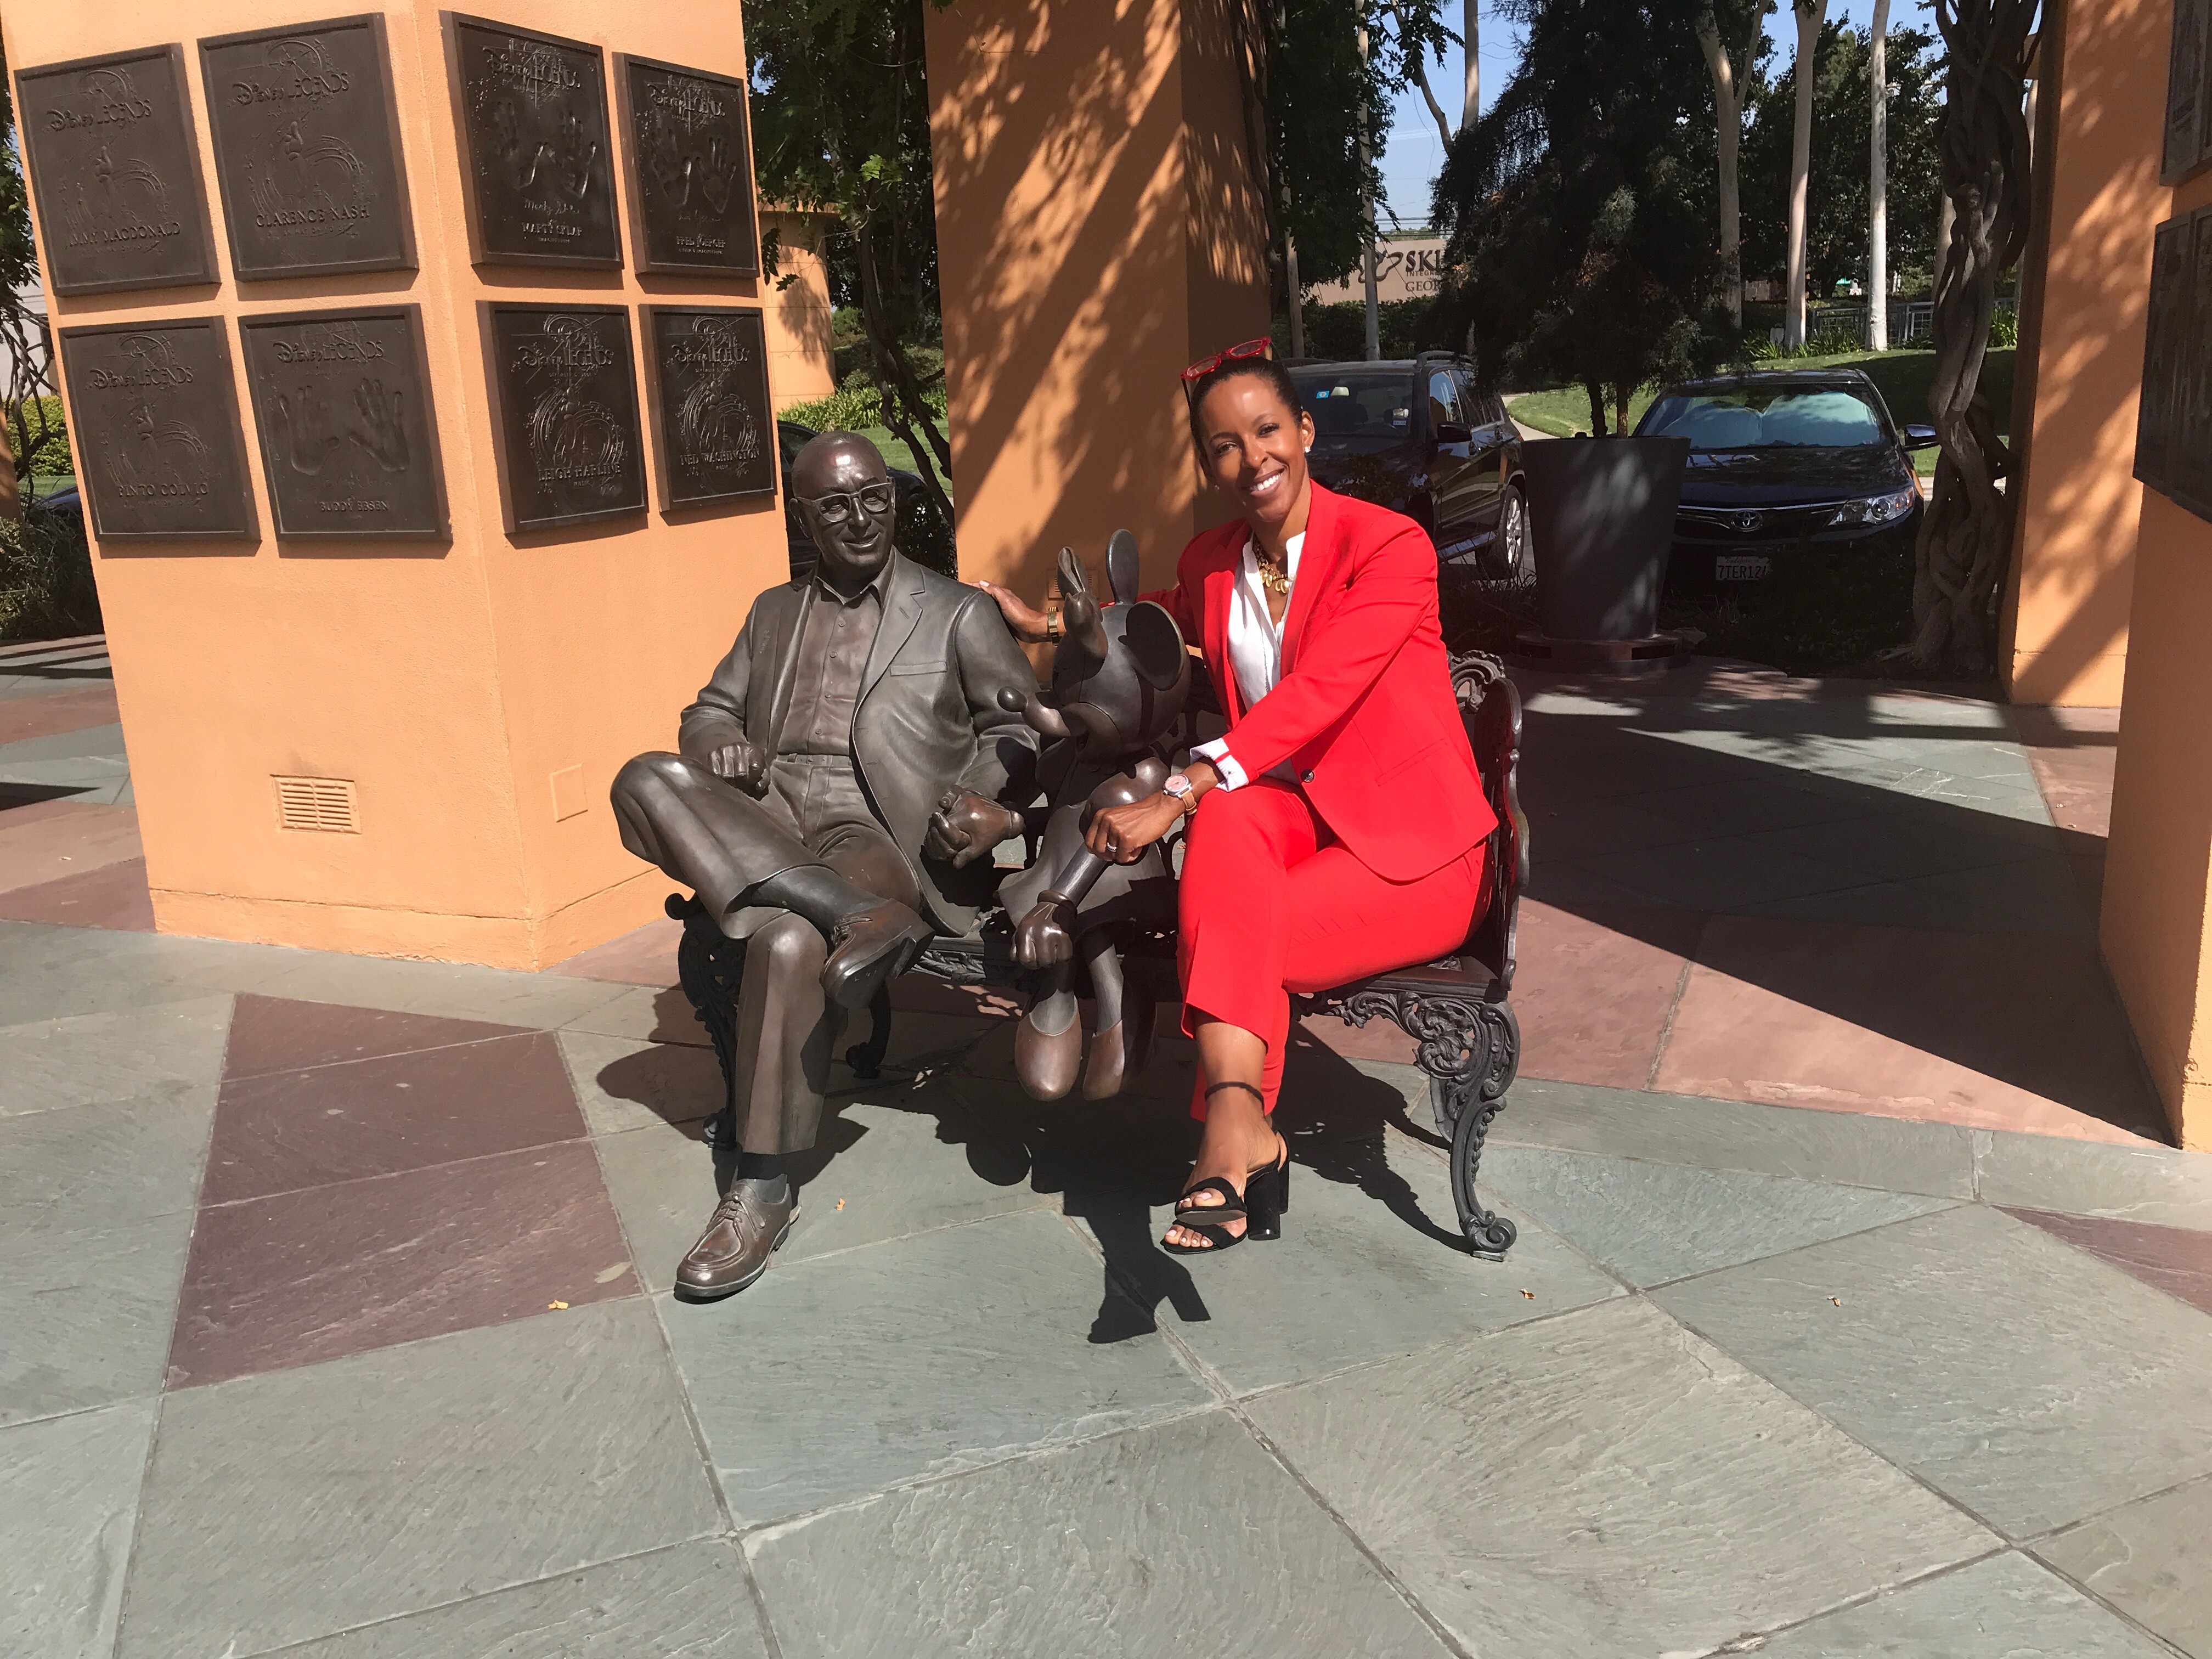 Leslie Gordon posing next to a statue.